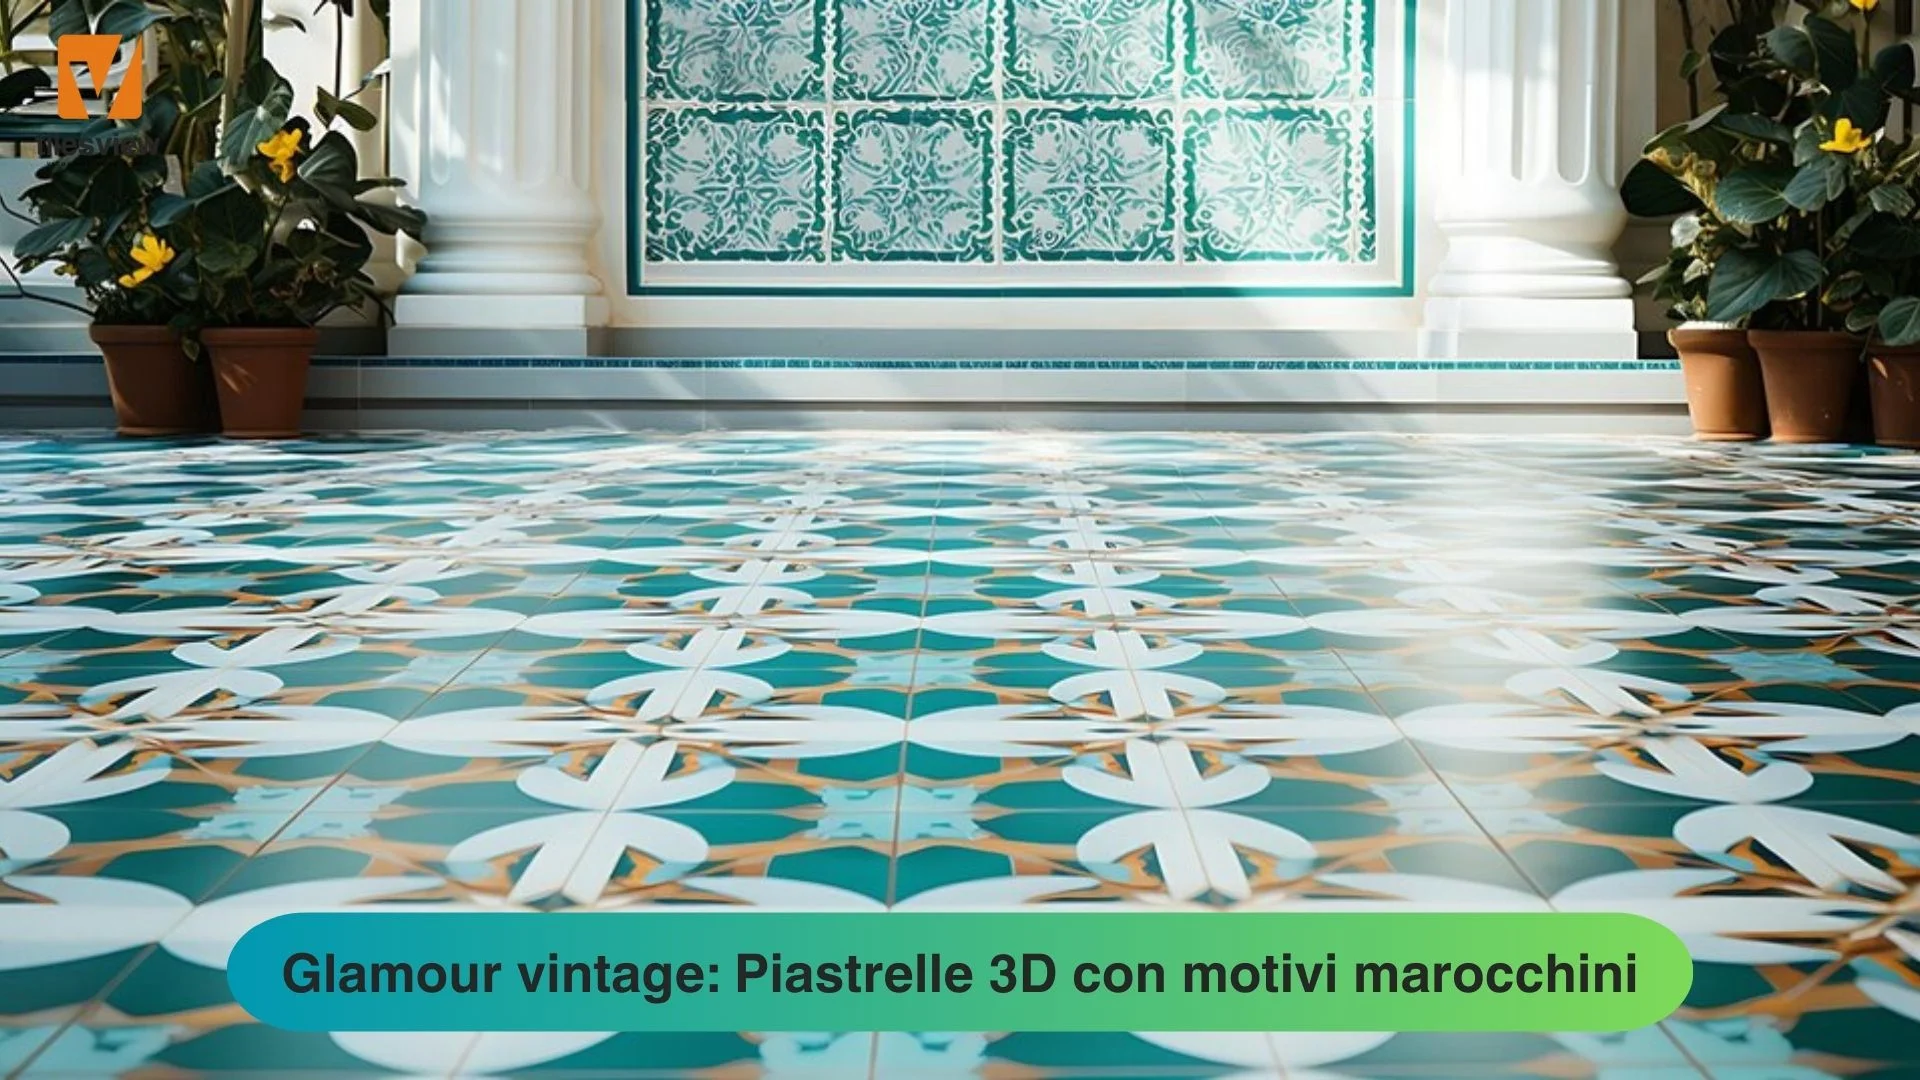 Glamour vintage: Piastrelle 3D con motivi marocchini